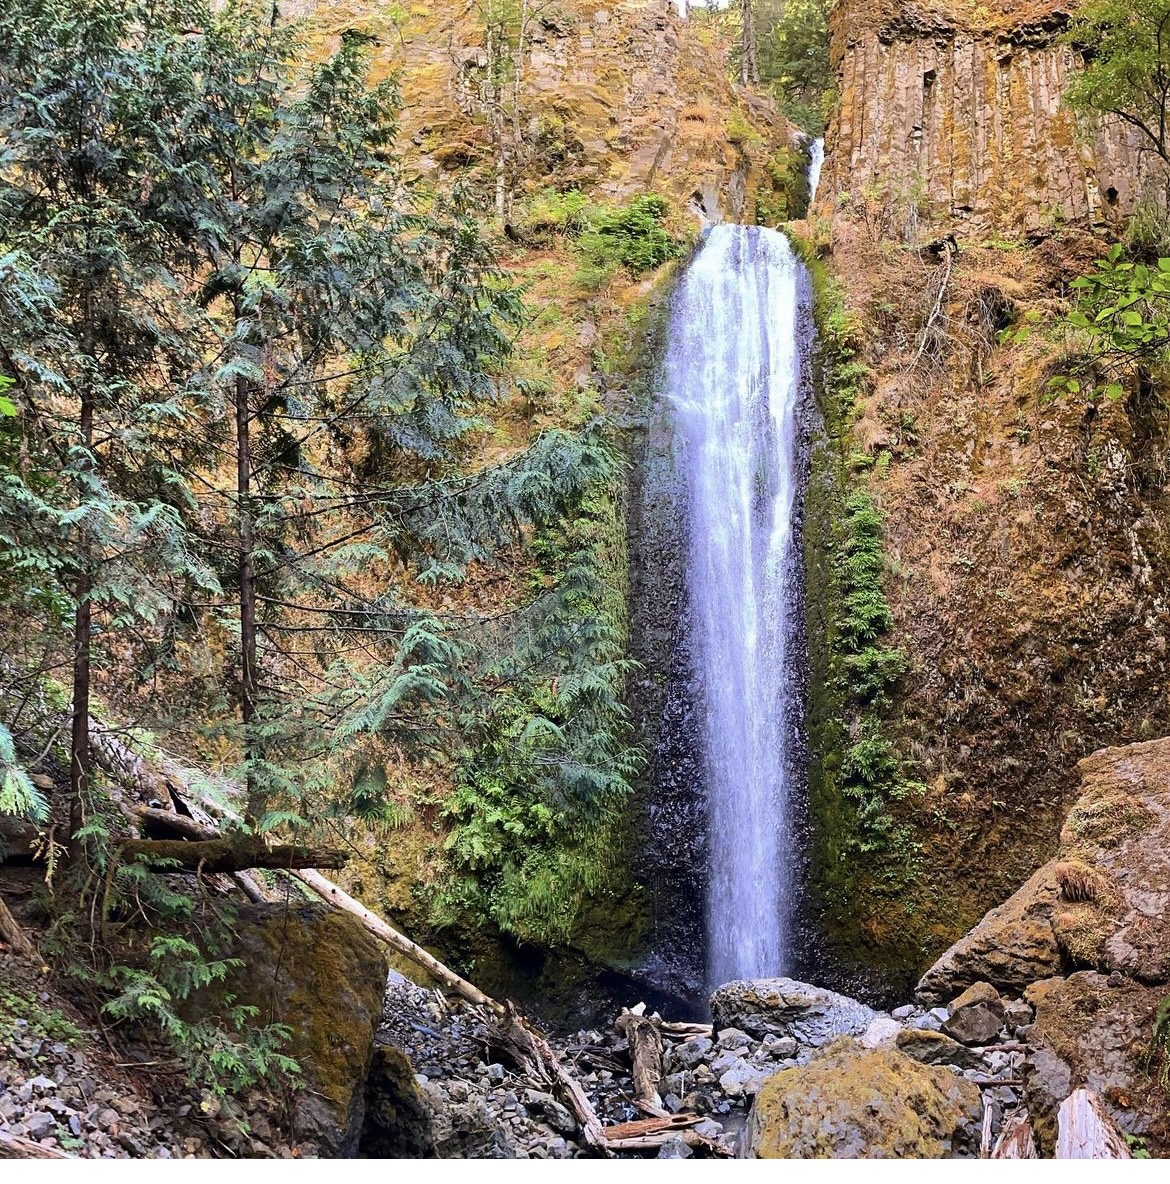 Gordon Creek Falls in the Columbia River Gorge